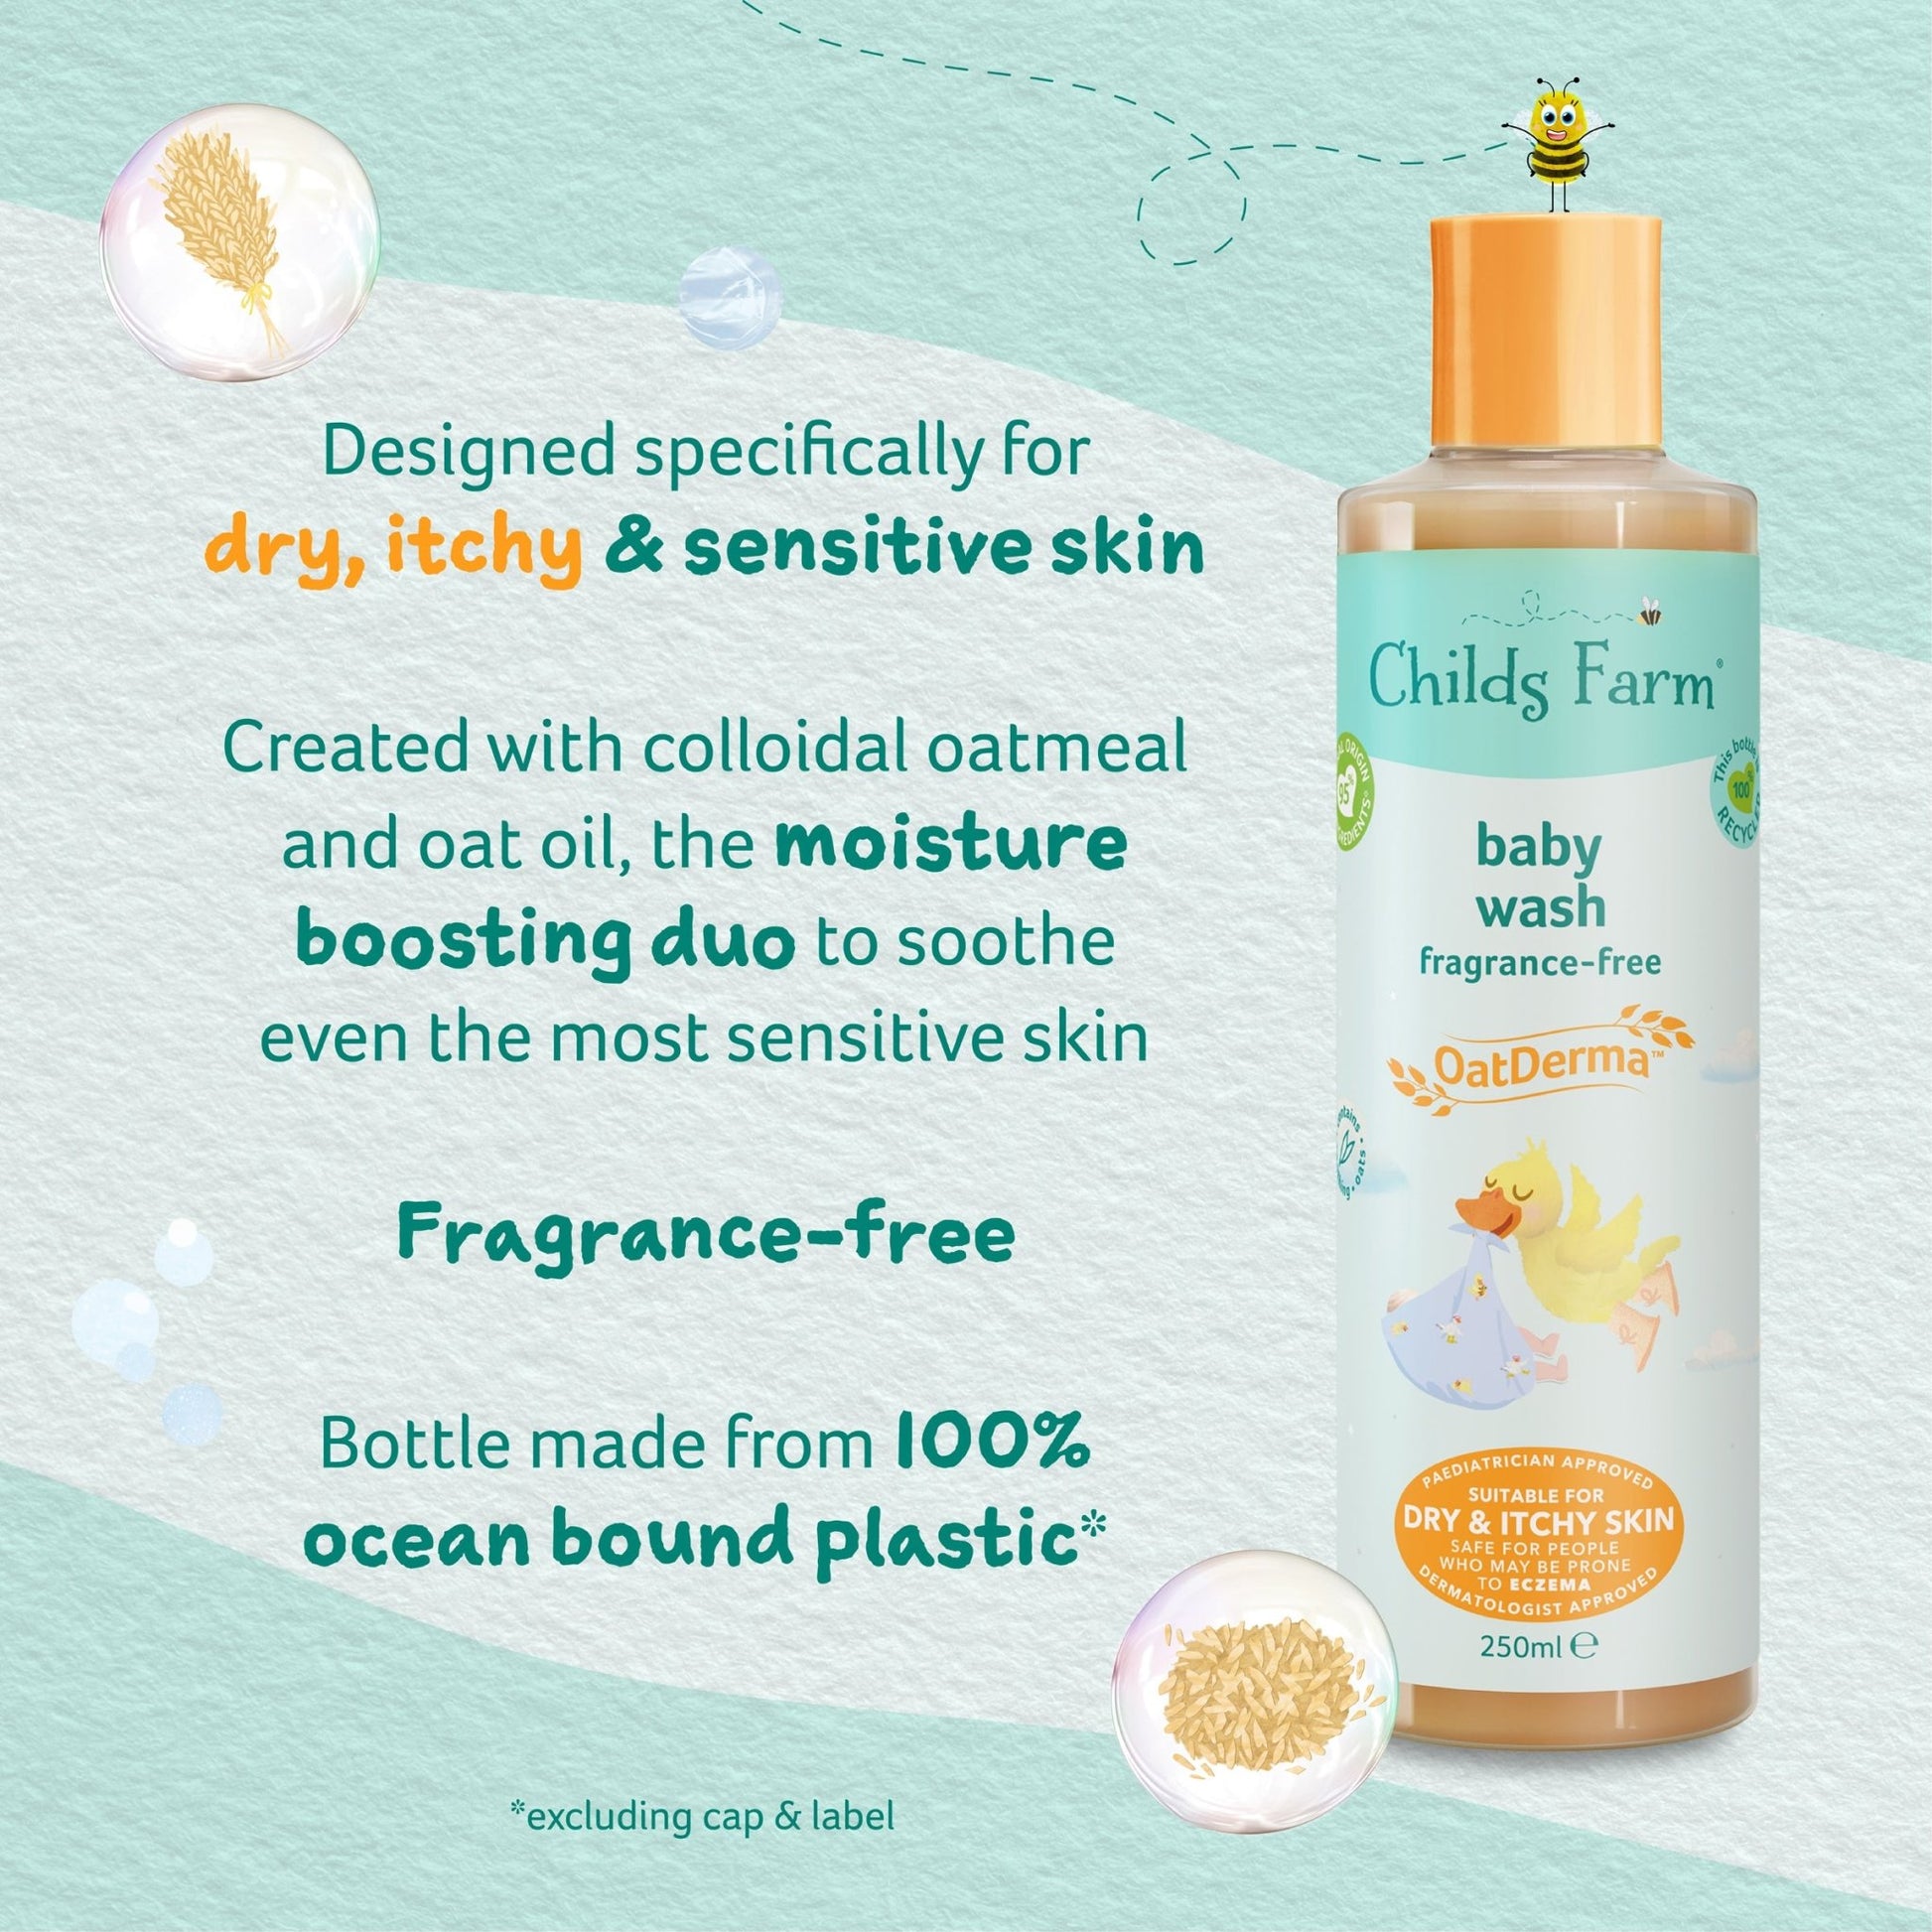 Childs Farm OatDerma™ baby wash fragrance-free